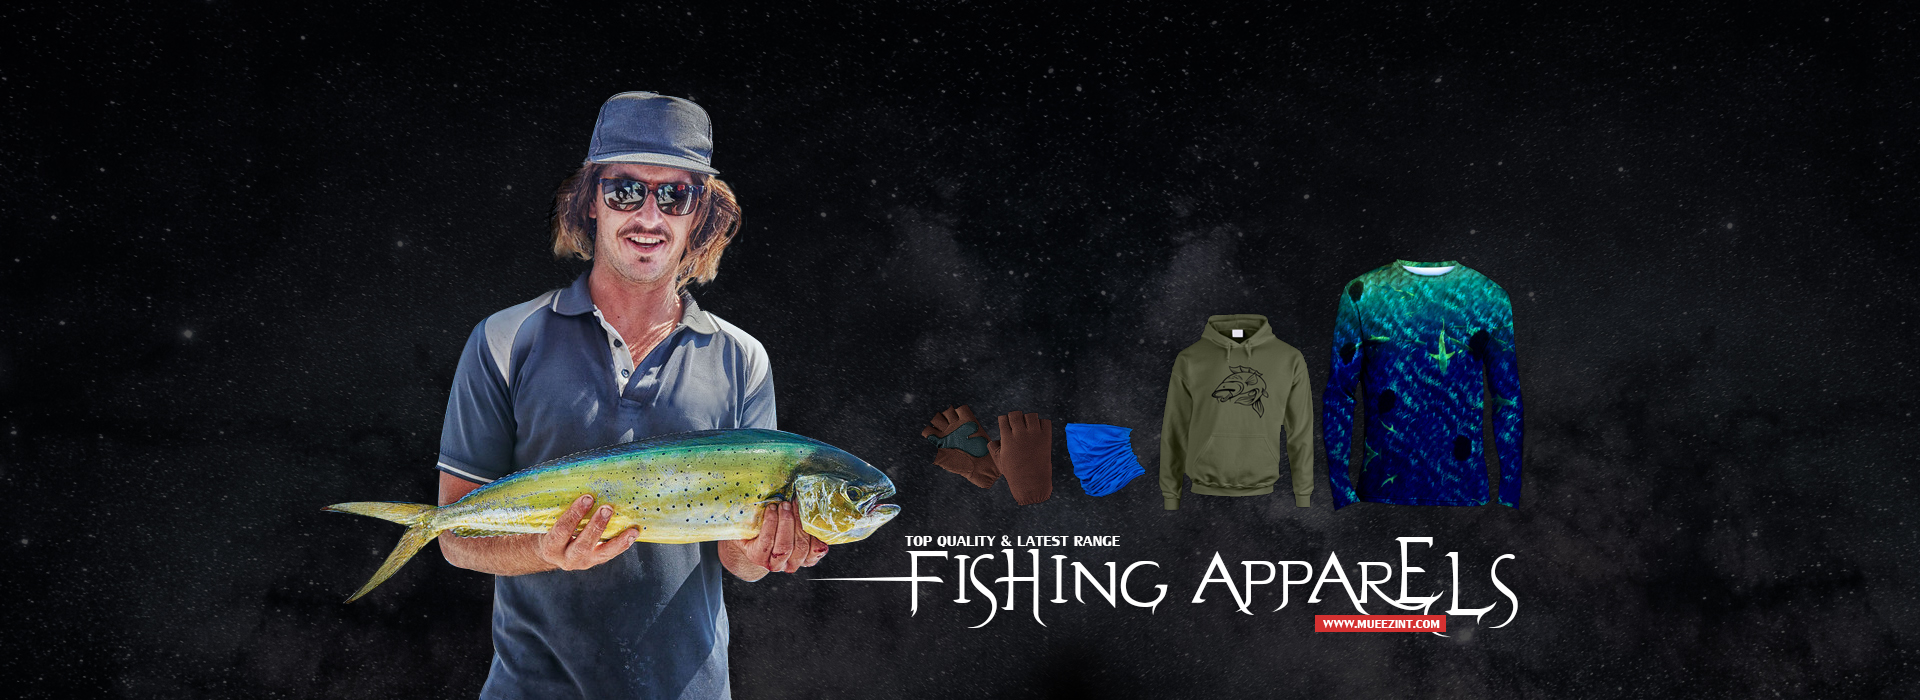 Fishing Apparels